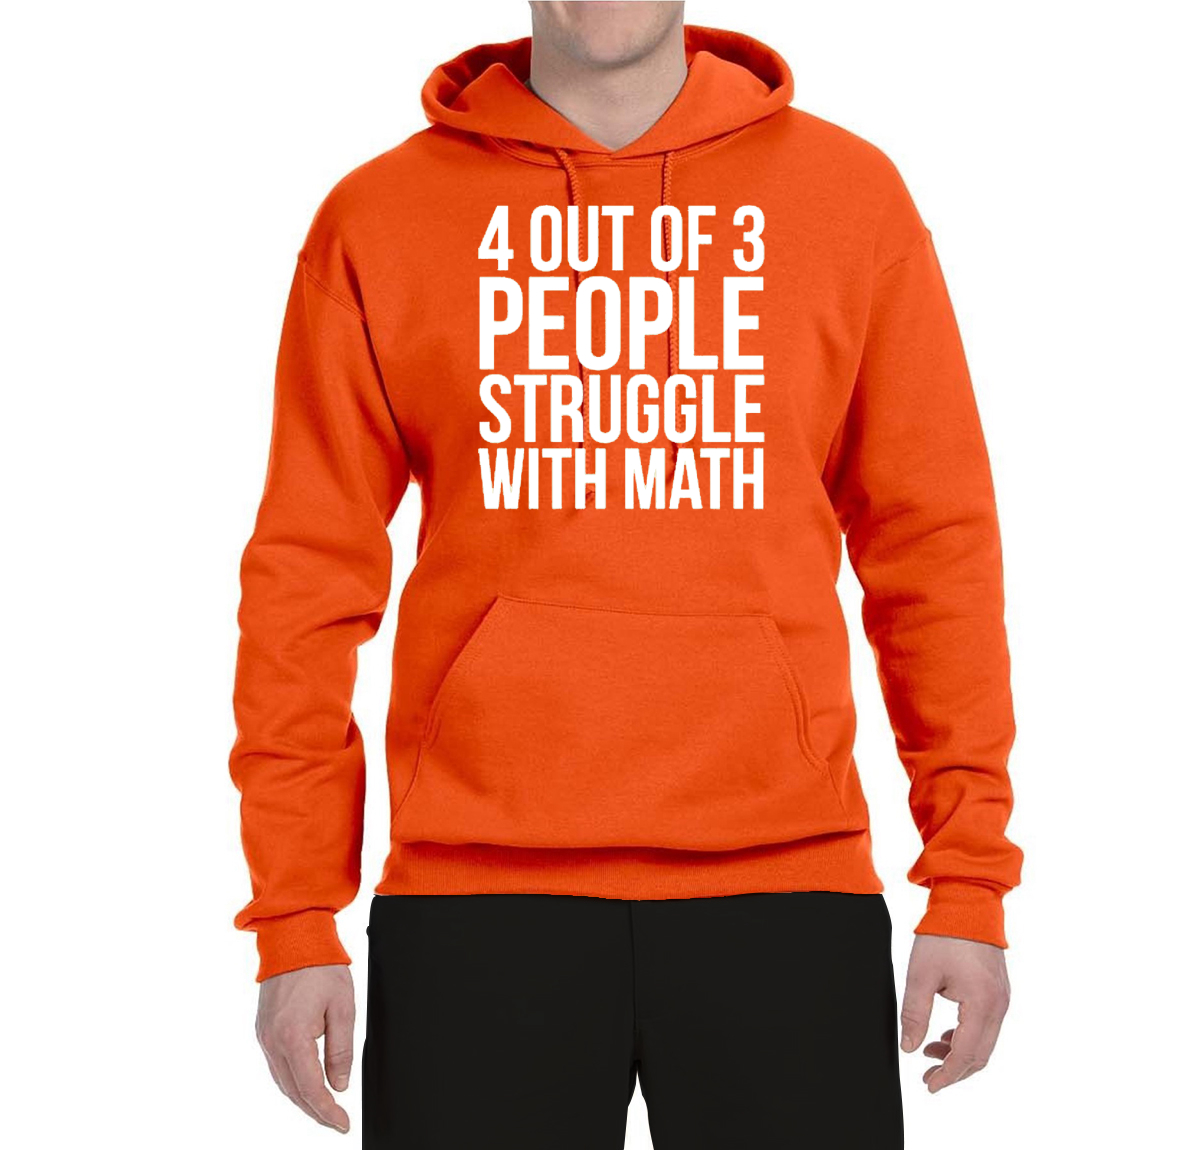 4 Out of 3 People Struggle with Math Joke Humor Unisex Graphic Hoodie Sweatshirt, Orange, 2XL - image 2 of 3